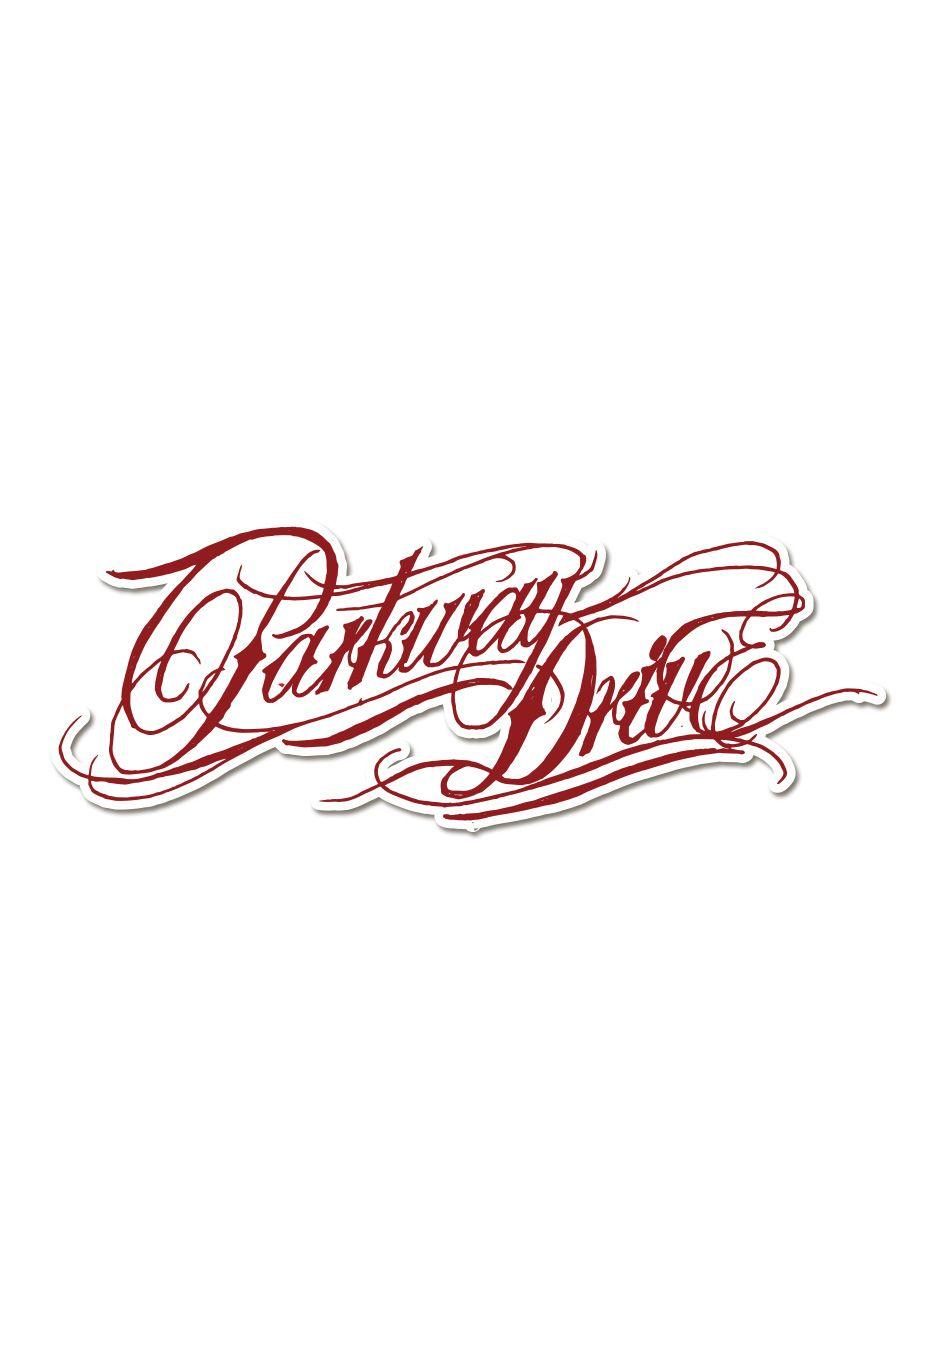 Parkway Drive Logo - Parkway Drive Logo Special Pack Shirt, Vinyl